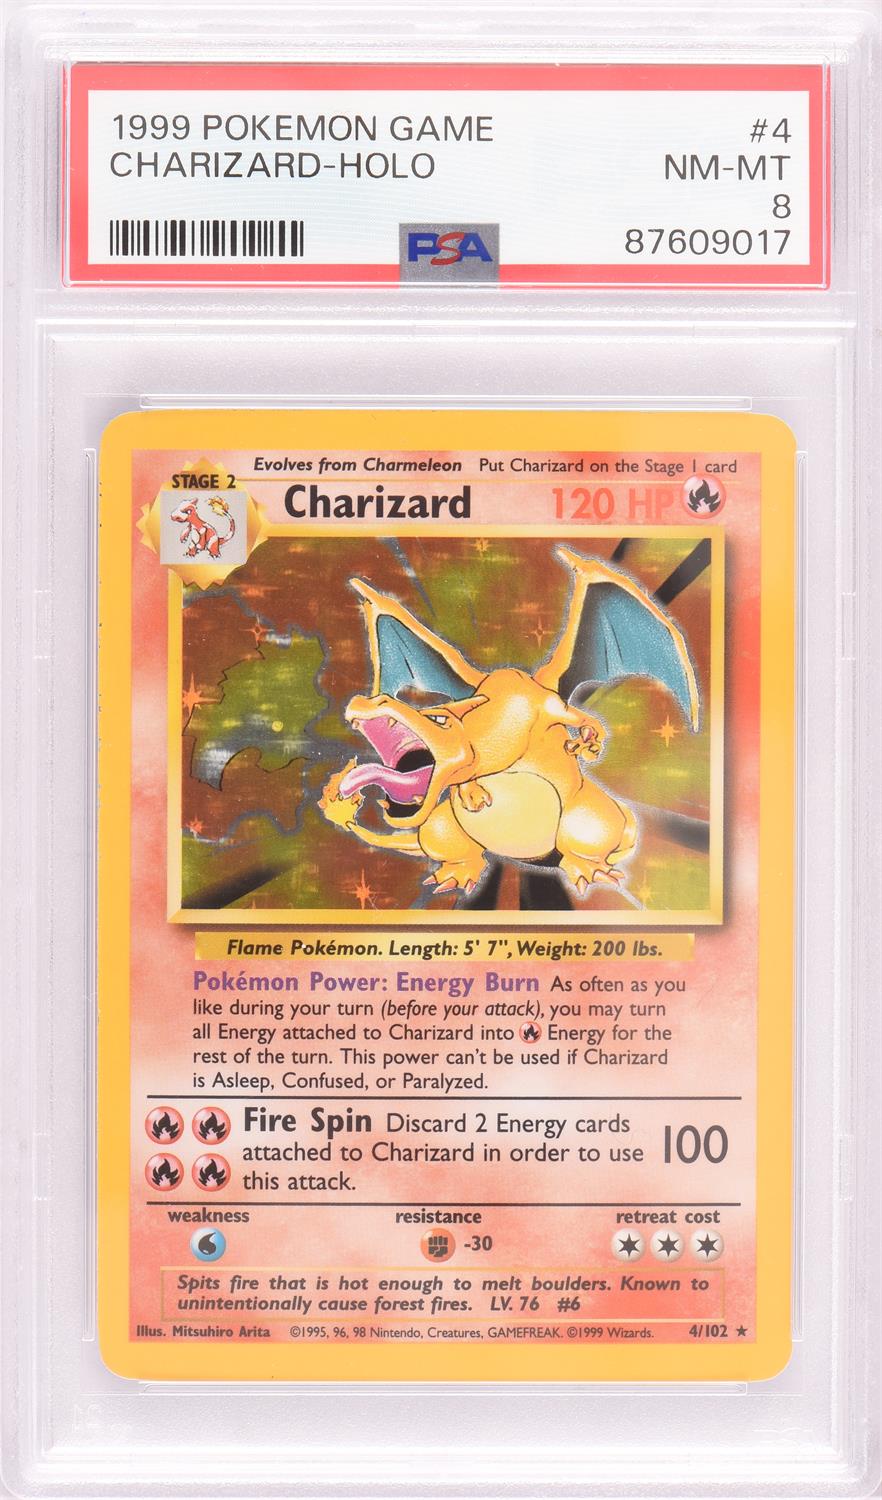 Pokemon TCG. Pokemon TCG. Charizard Base Set Holographic Pokémon Card. Number 4/102 graded PSA 8.